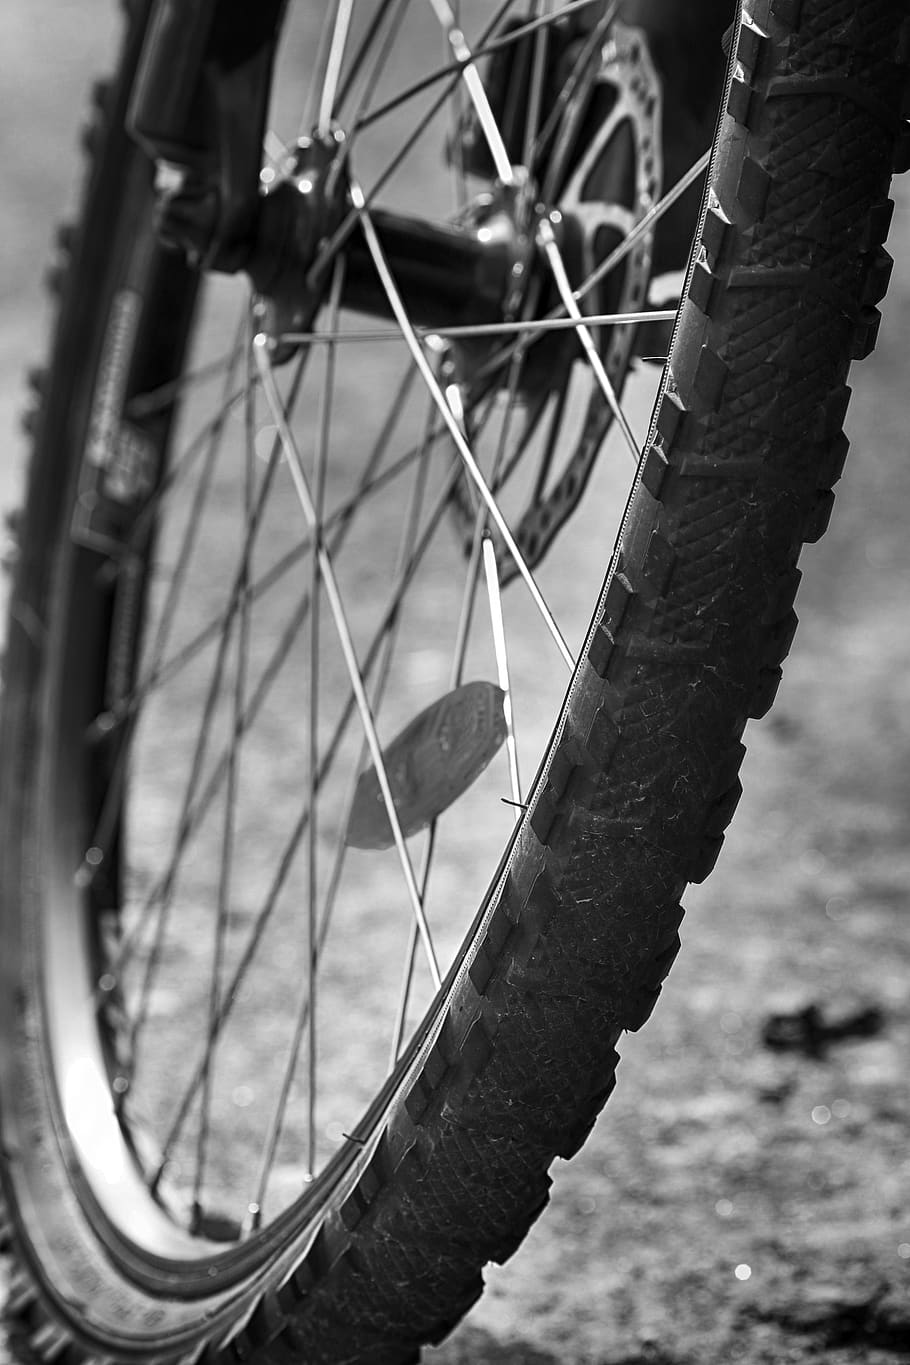 wheel, bike, spoke, transportation system, outdoors, tire, bicycle, focus on foreground, transportation, mode of transportation